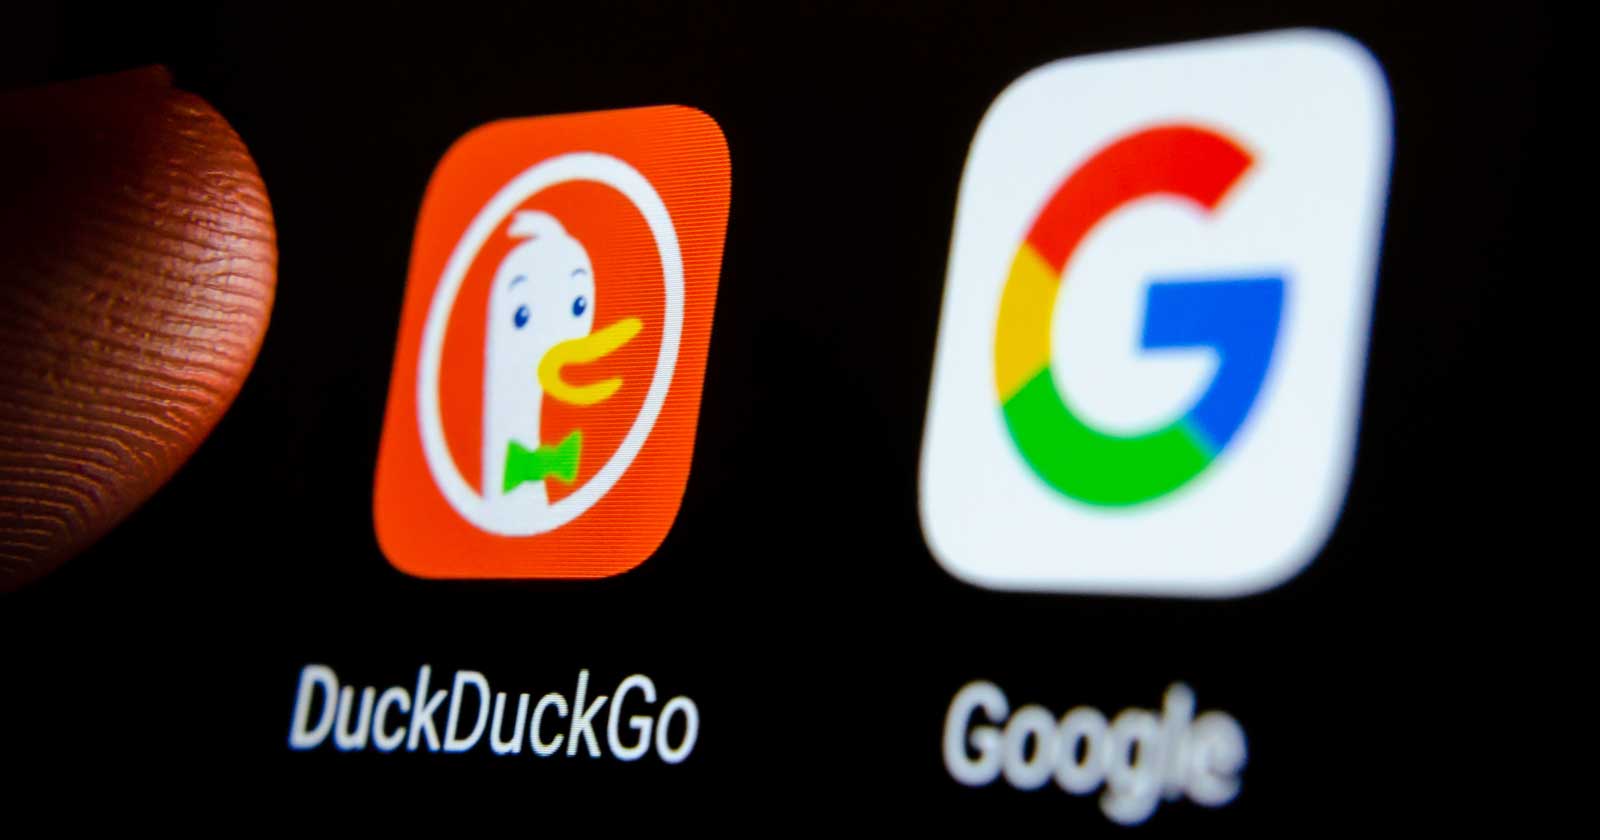 DuckDuckGo Surpasses 100M Daily Searches